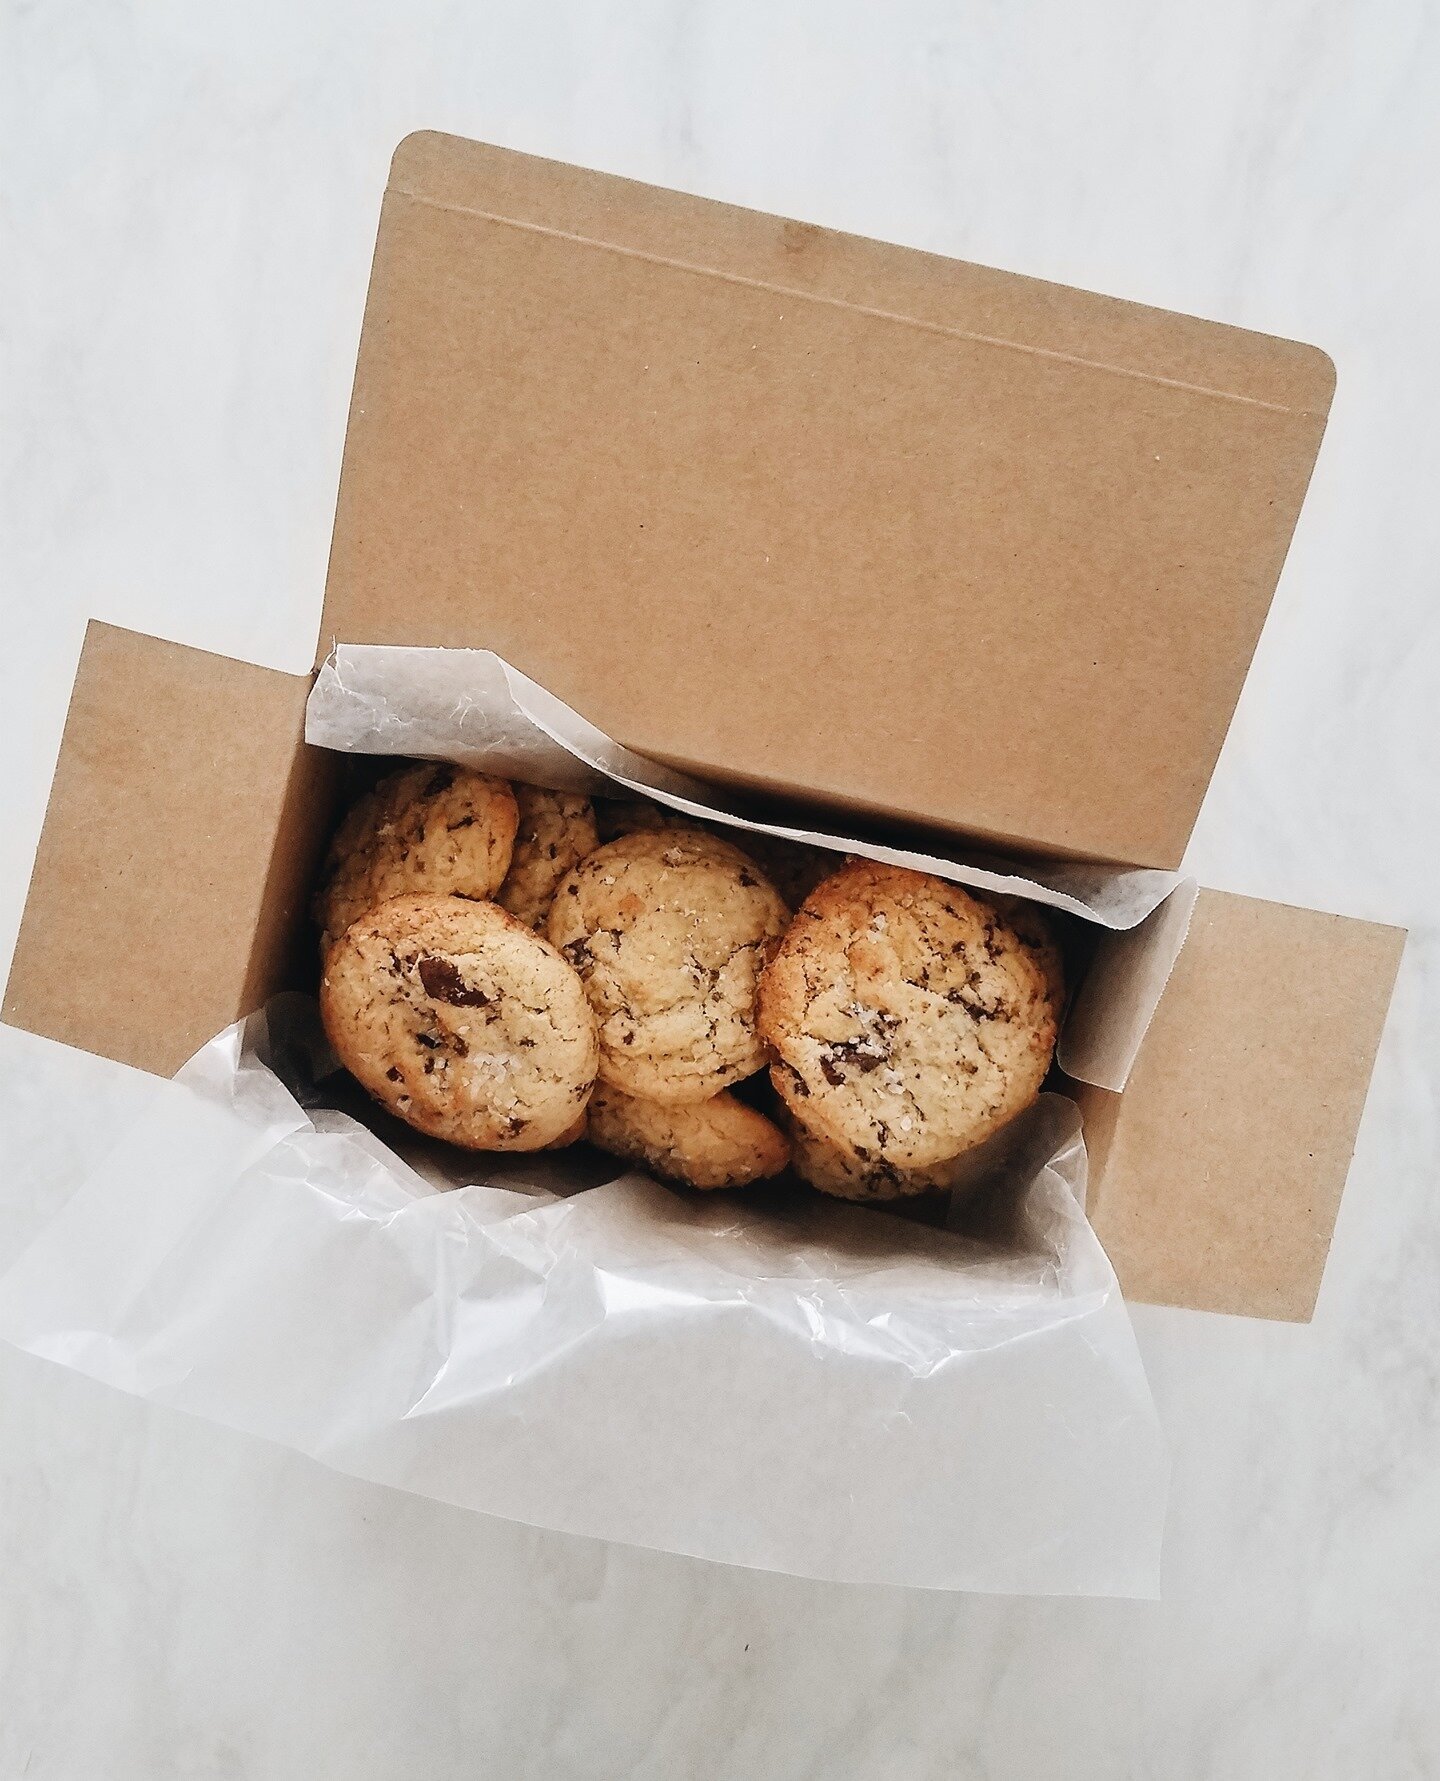 Cookies? Yes please. Courage? Always. Sending you some cookies and encouragement to sweeten your week. 😋⁣⁠
⁣⁠⁣⁠
⁣⁠⁣⁠
⁣⁠⁣⁠
⁠
⁠
⁠
⁣⁠⁣⁠
____⁣⁠⁣⁠
#foodandcourage #defendhappiness #spreadcourage #smallbusiness #supportsmallbusinesses #cookiesforacause #b